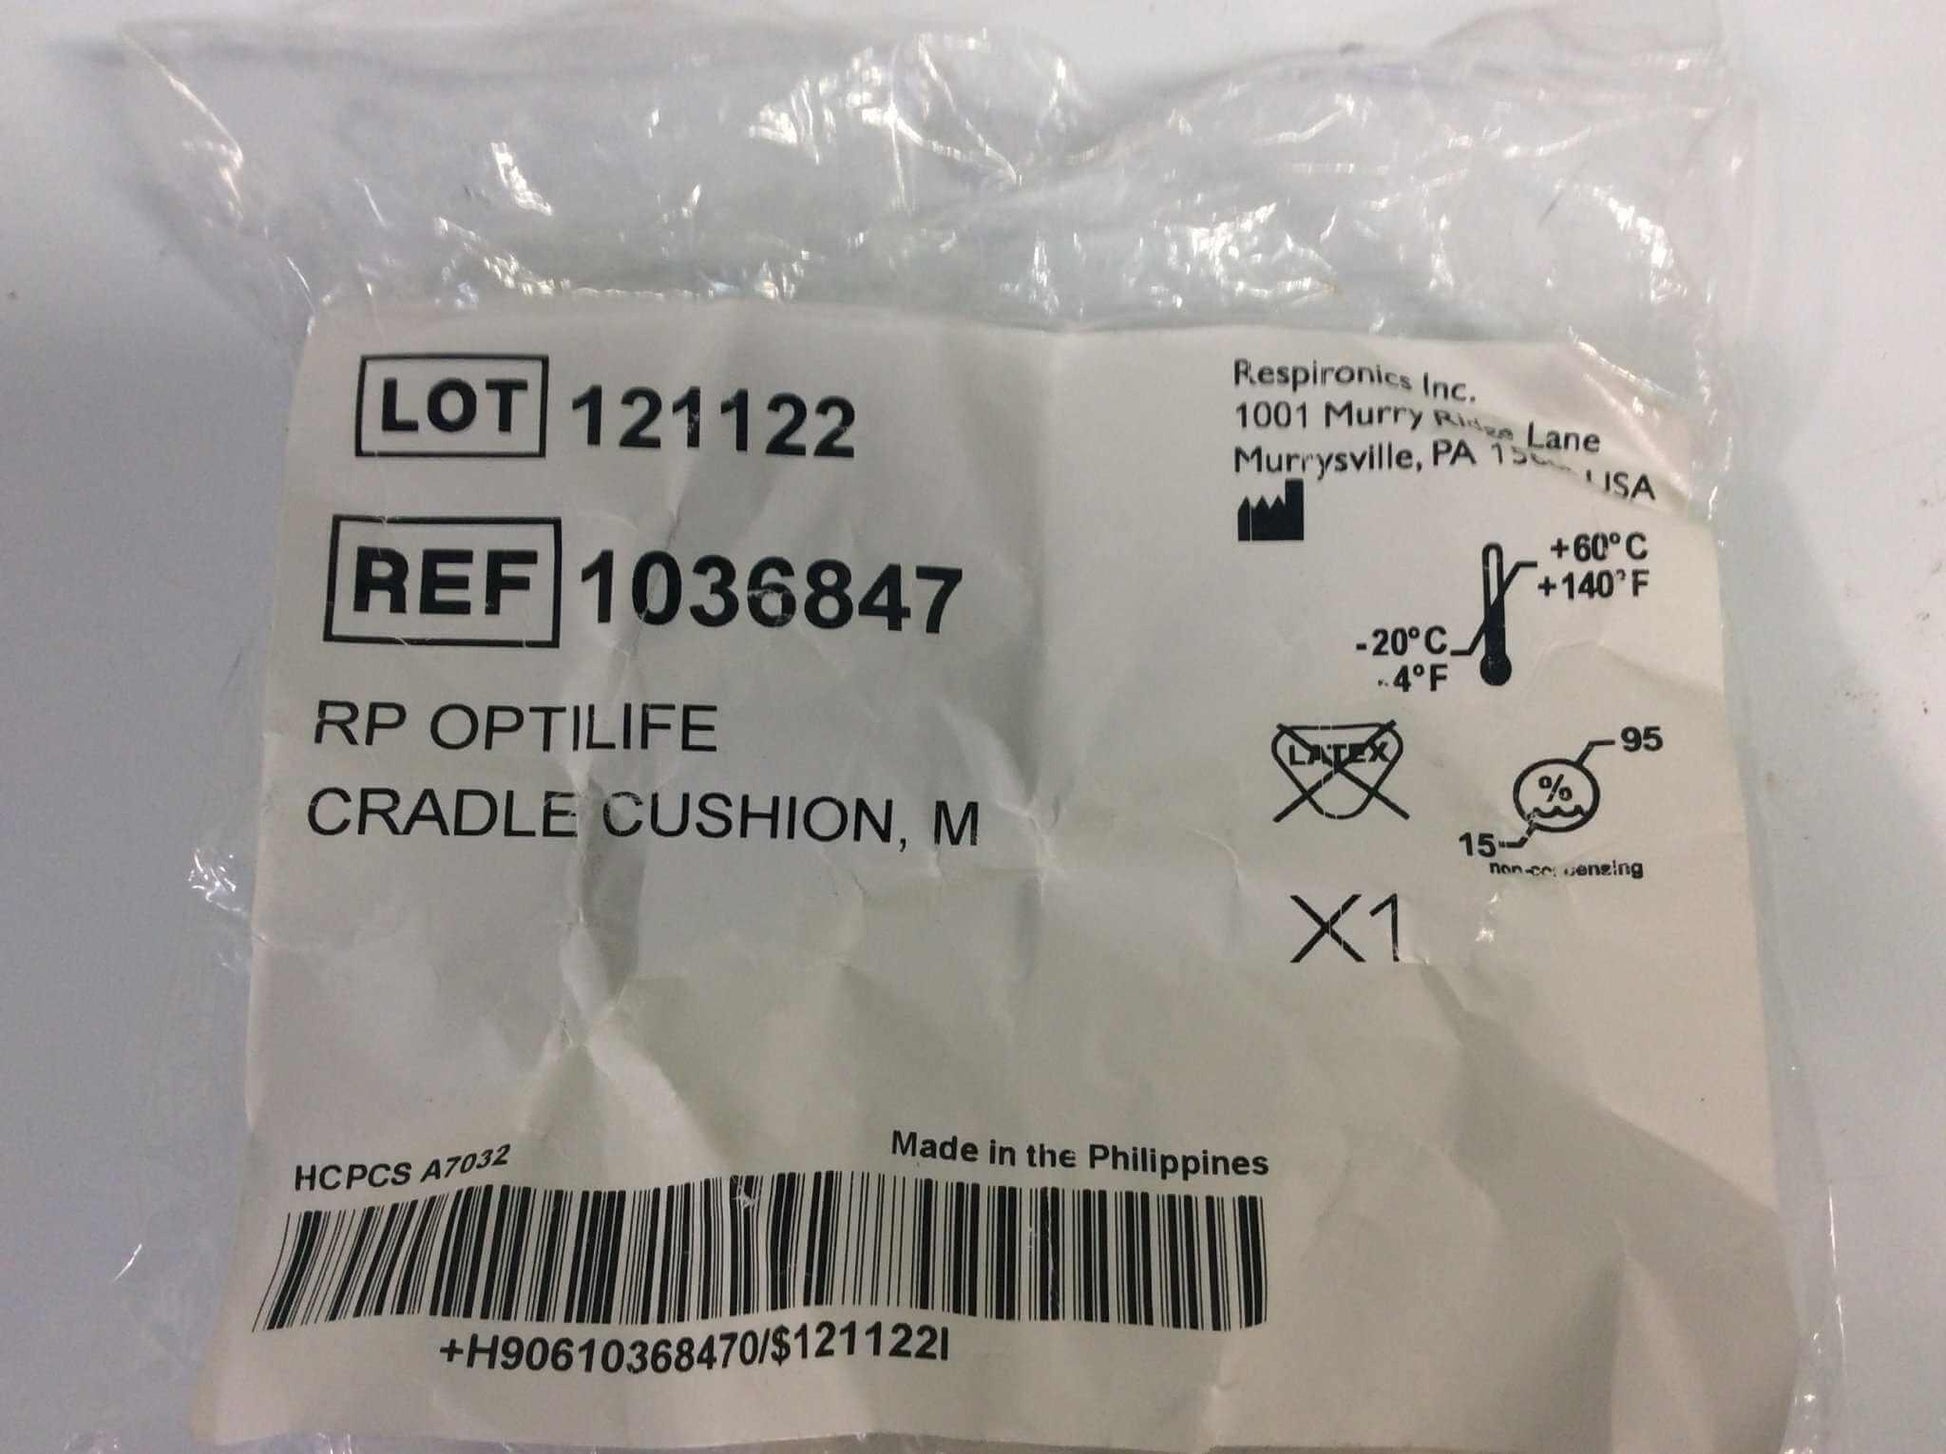 Lot of 2 NEW Philips Respironics Optilife Medium Cradle Cushions 1036847 - MBR Medicals